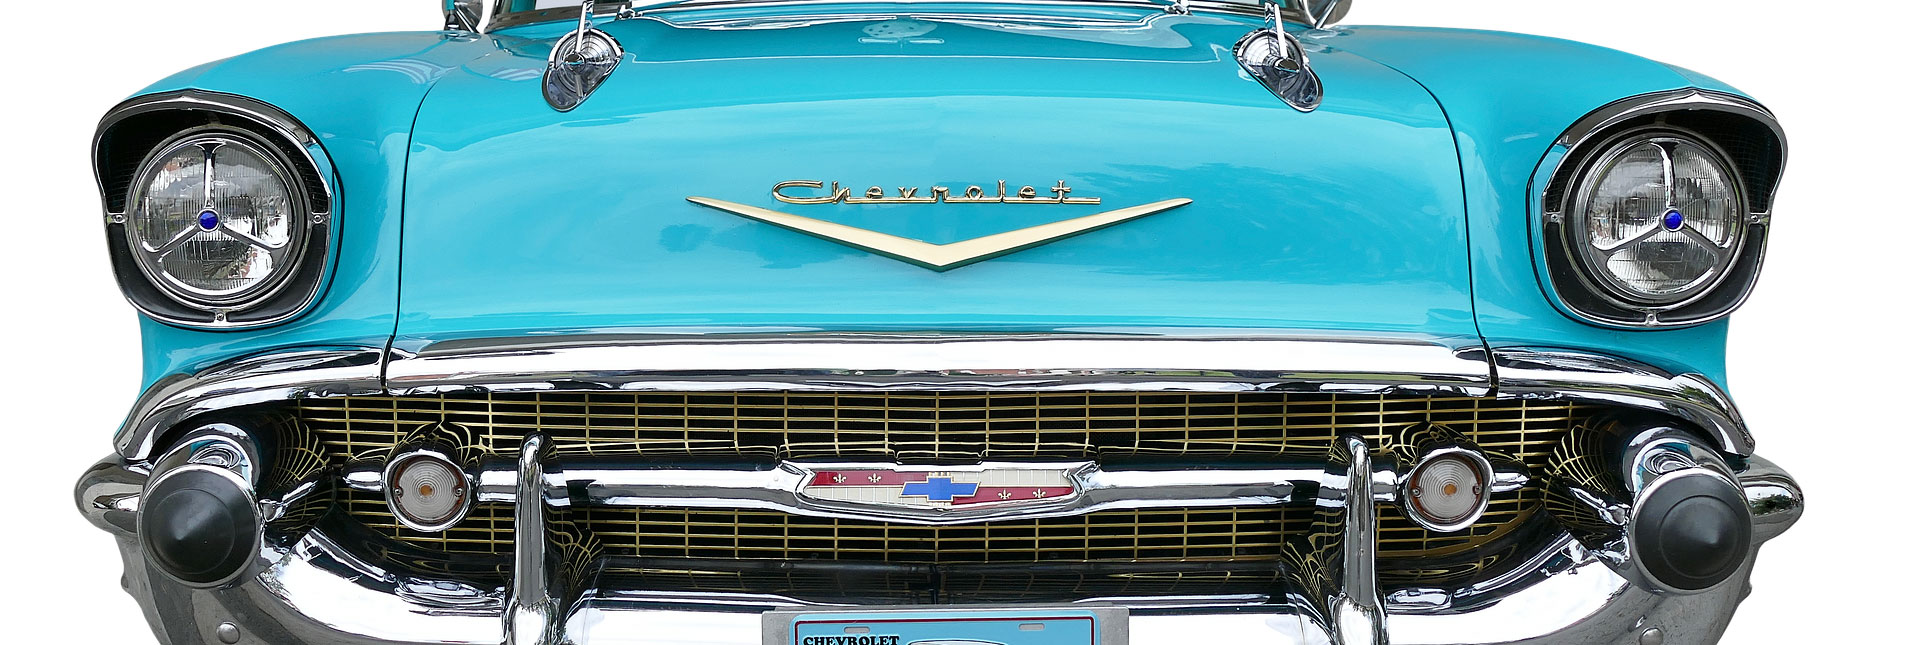 Chevy Car 1955-57